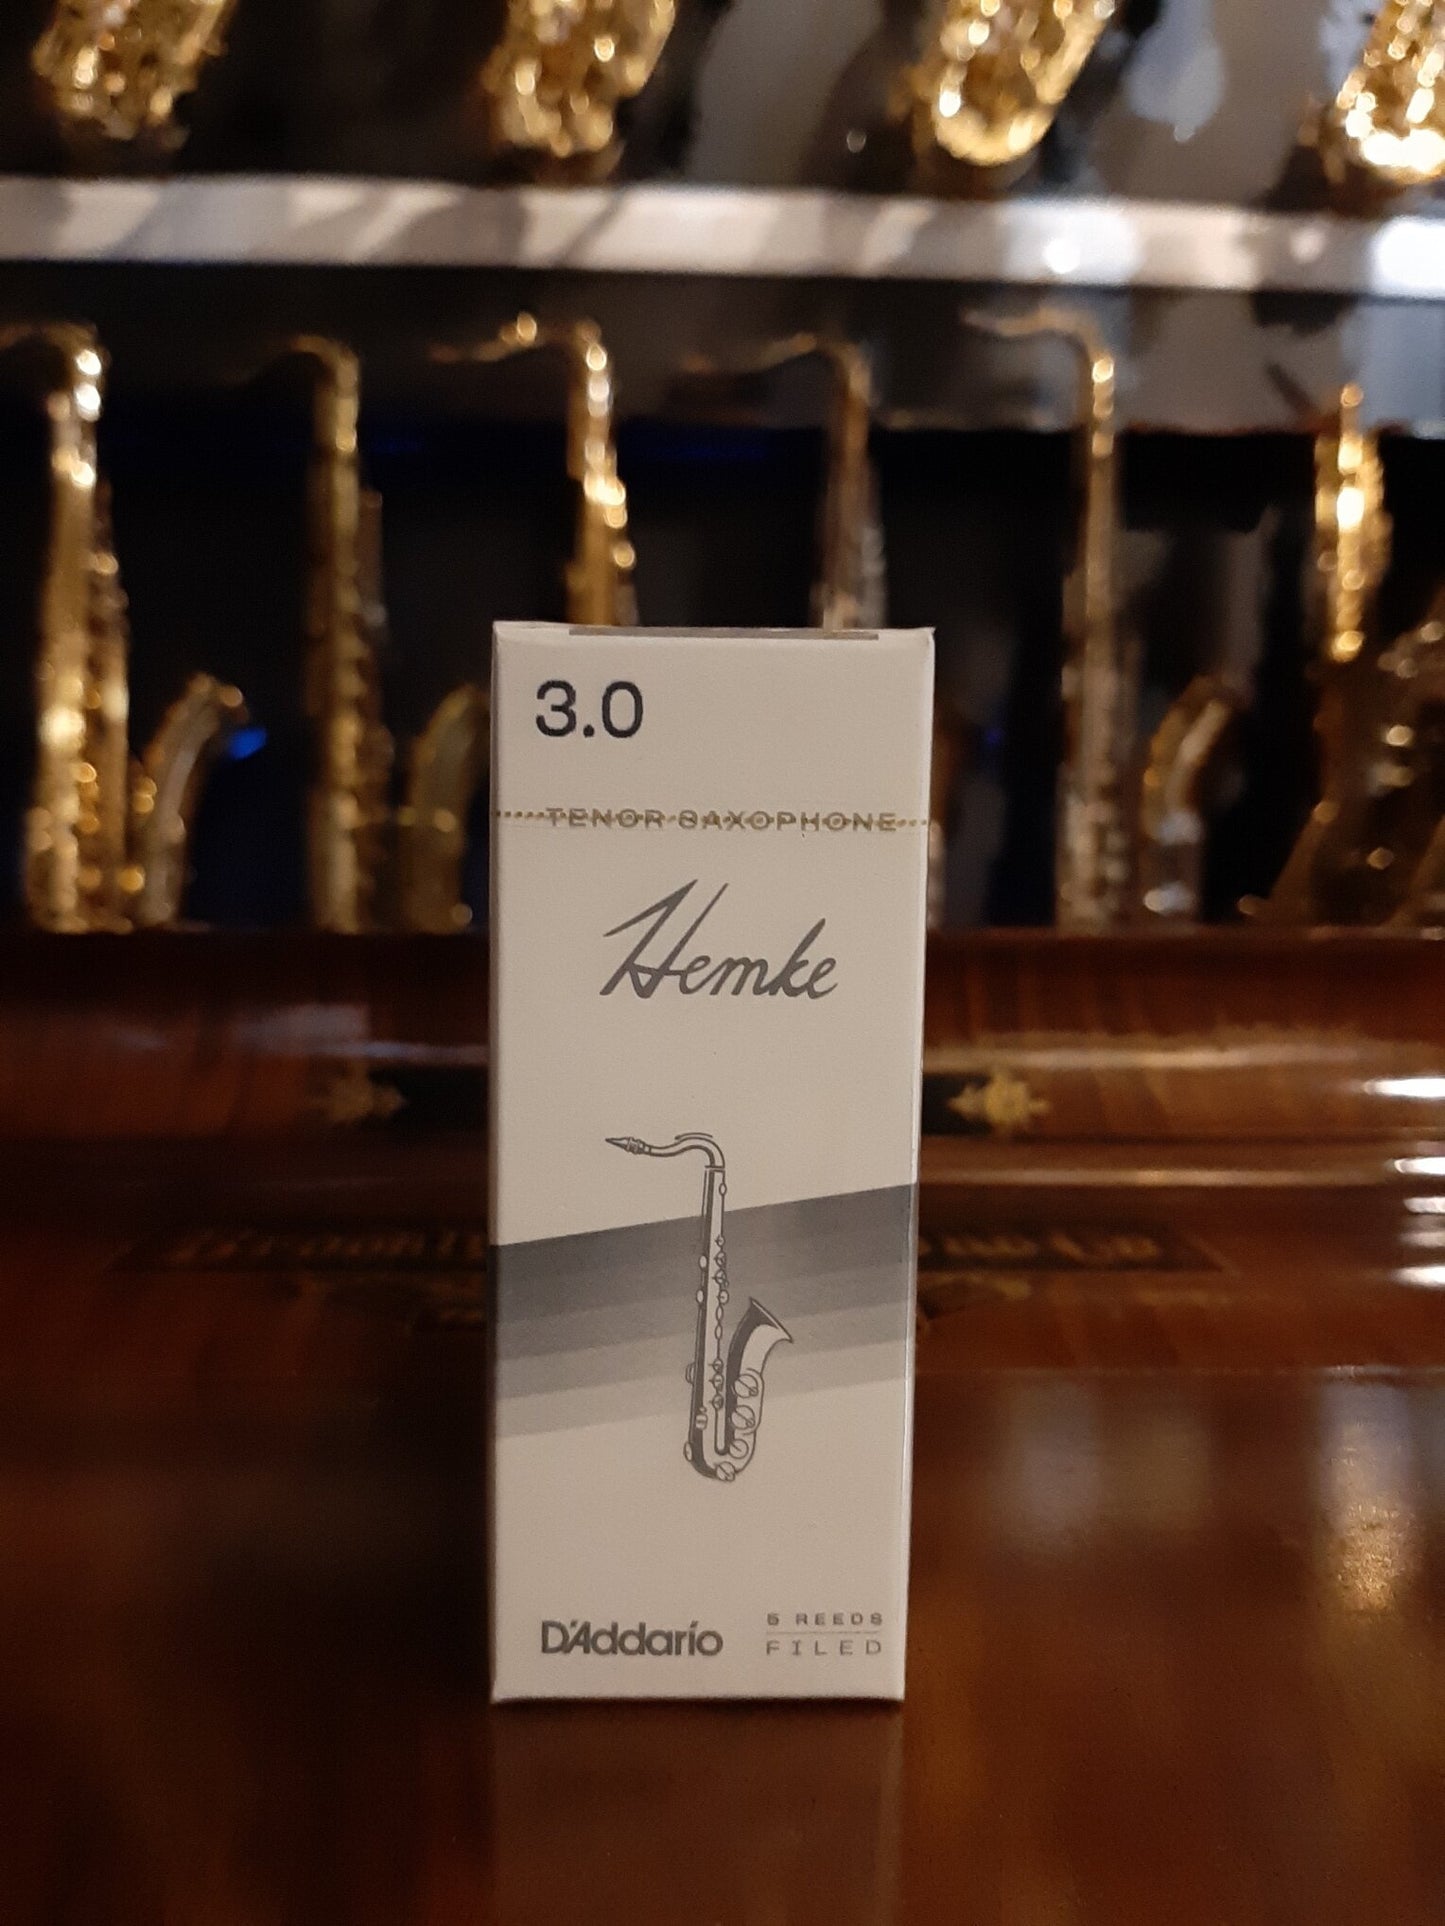 D'Addario Henke Tenor Saxophone Filed Reeds 5 Pack